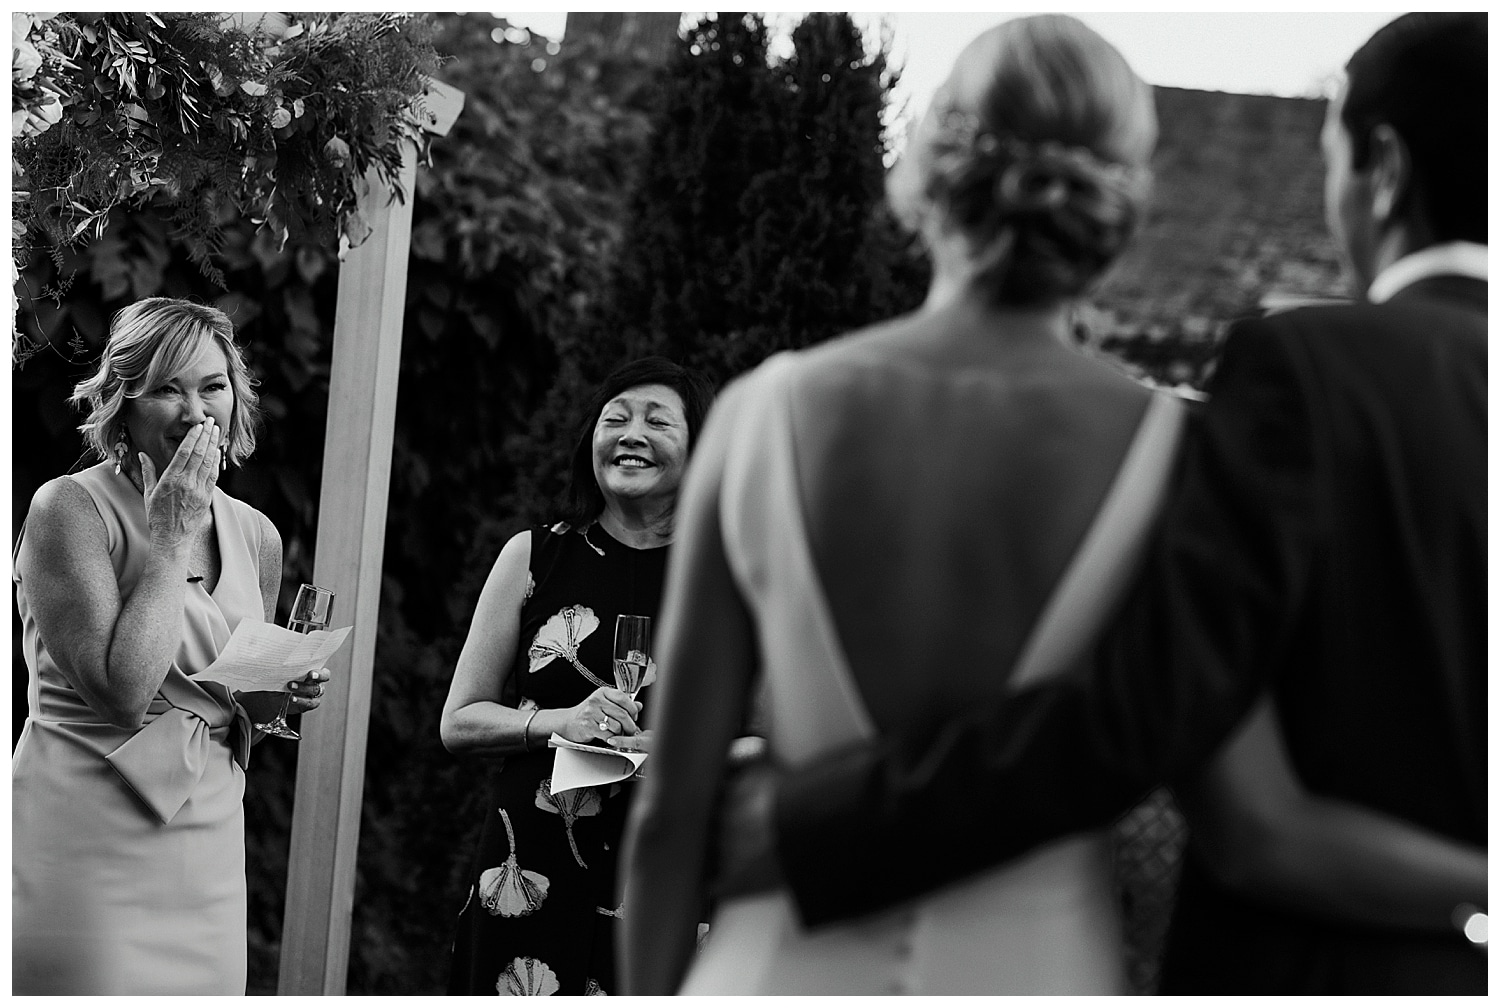 wedding toasts at microwedding in Watertown, Massachusetts